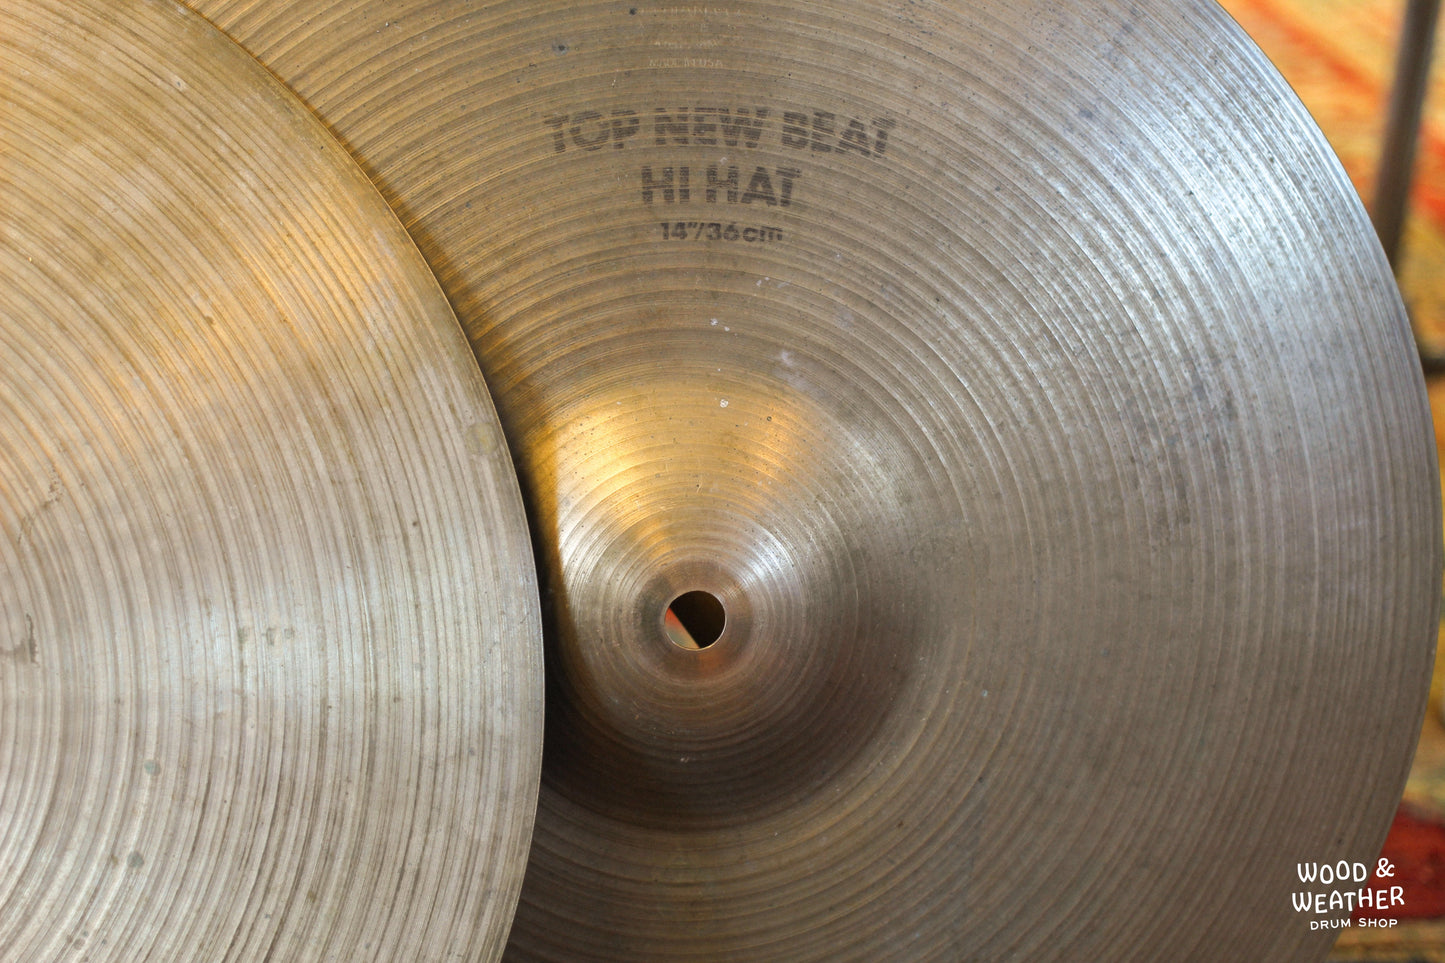 1980s A. Zildjian "CO. Stamp" New Beat Hi-Hat Cymbals 965/1380g